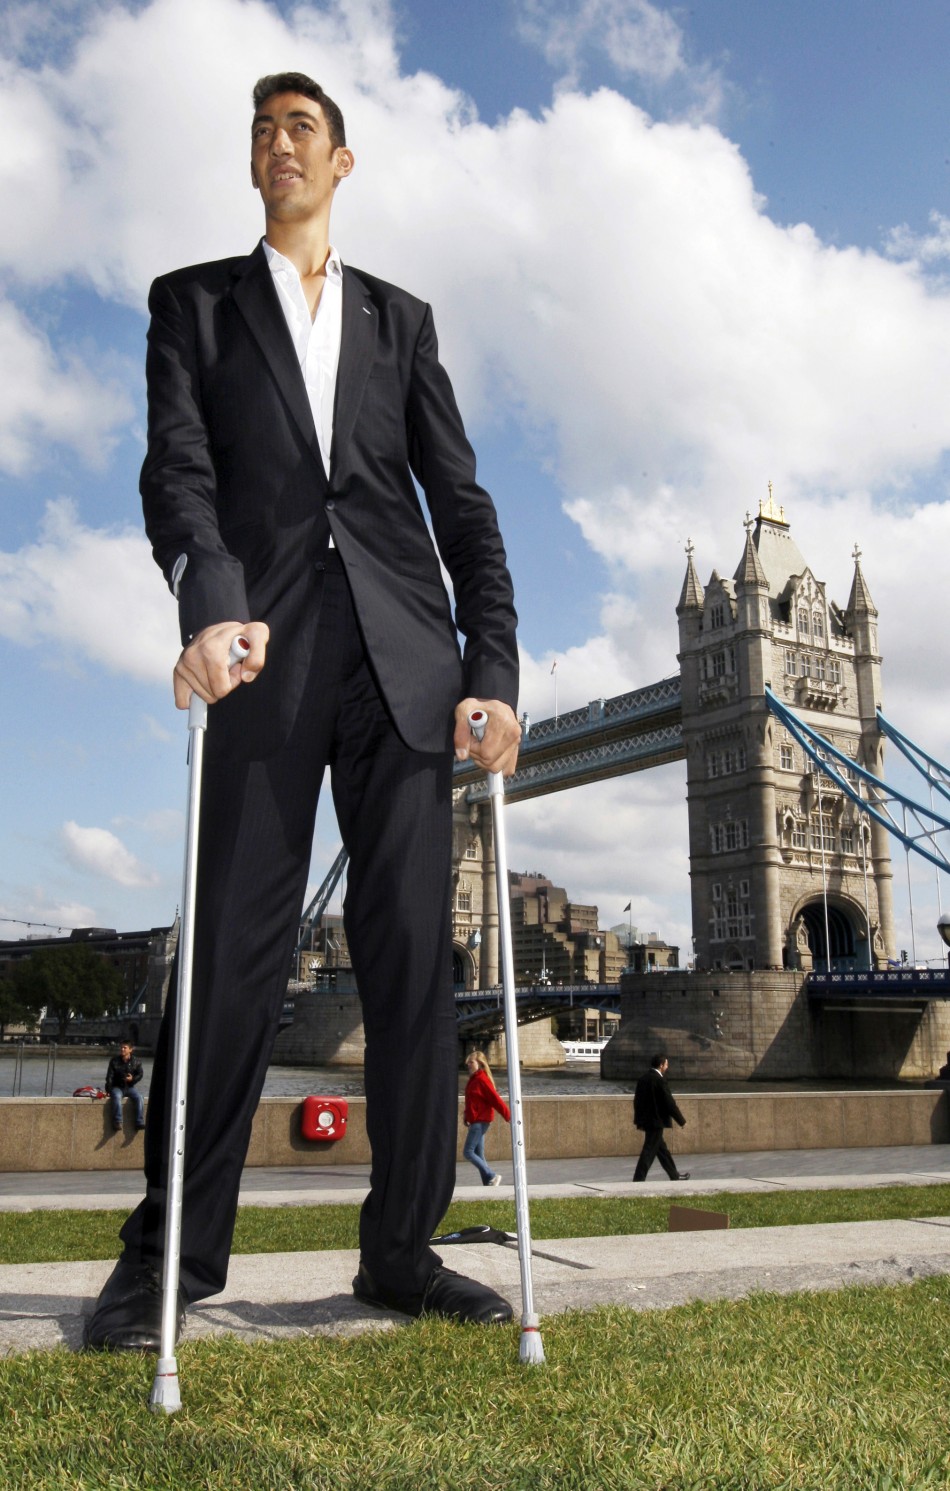 Herzegovinian men are the tallest in the world